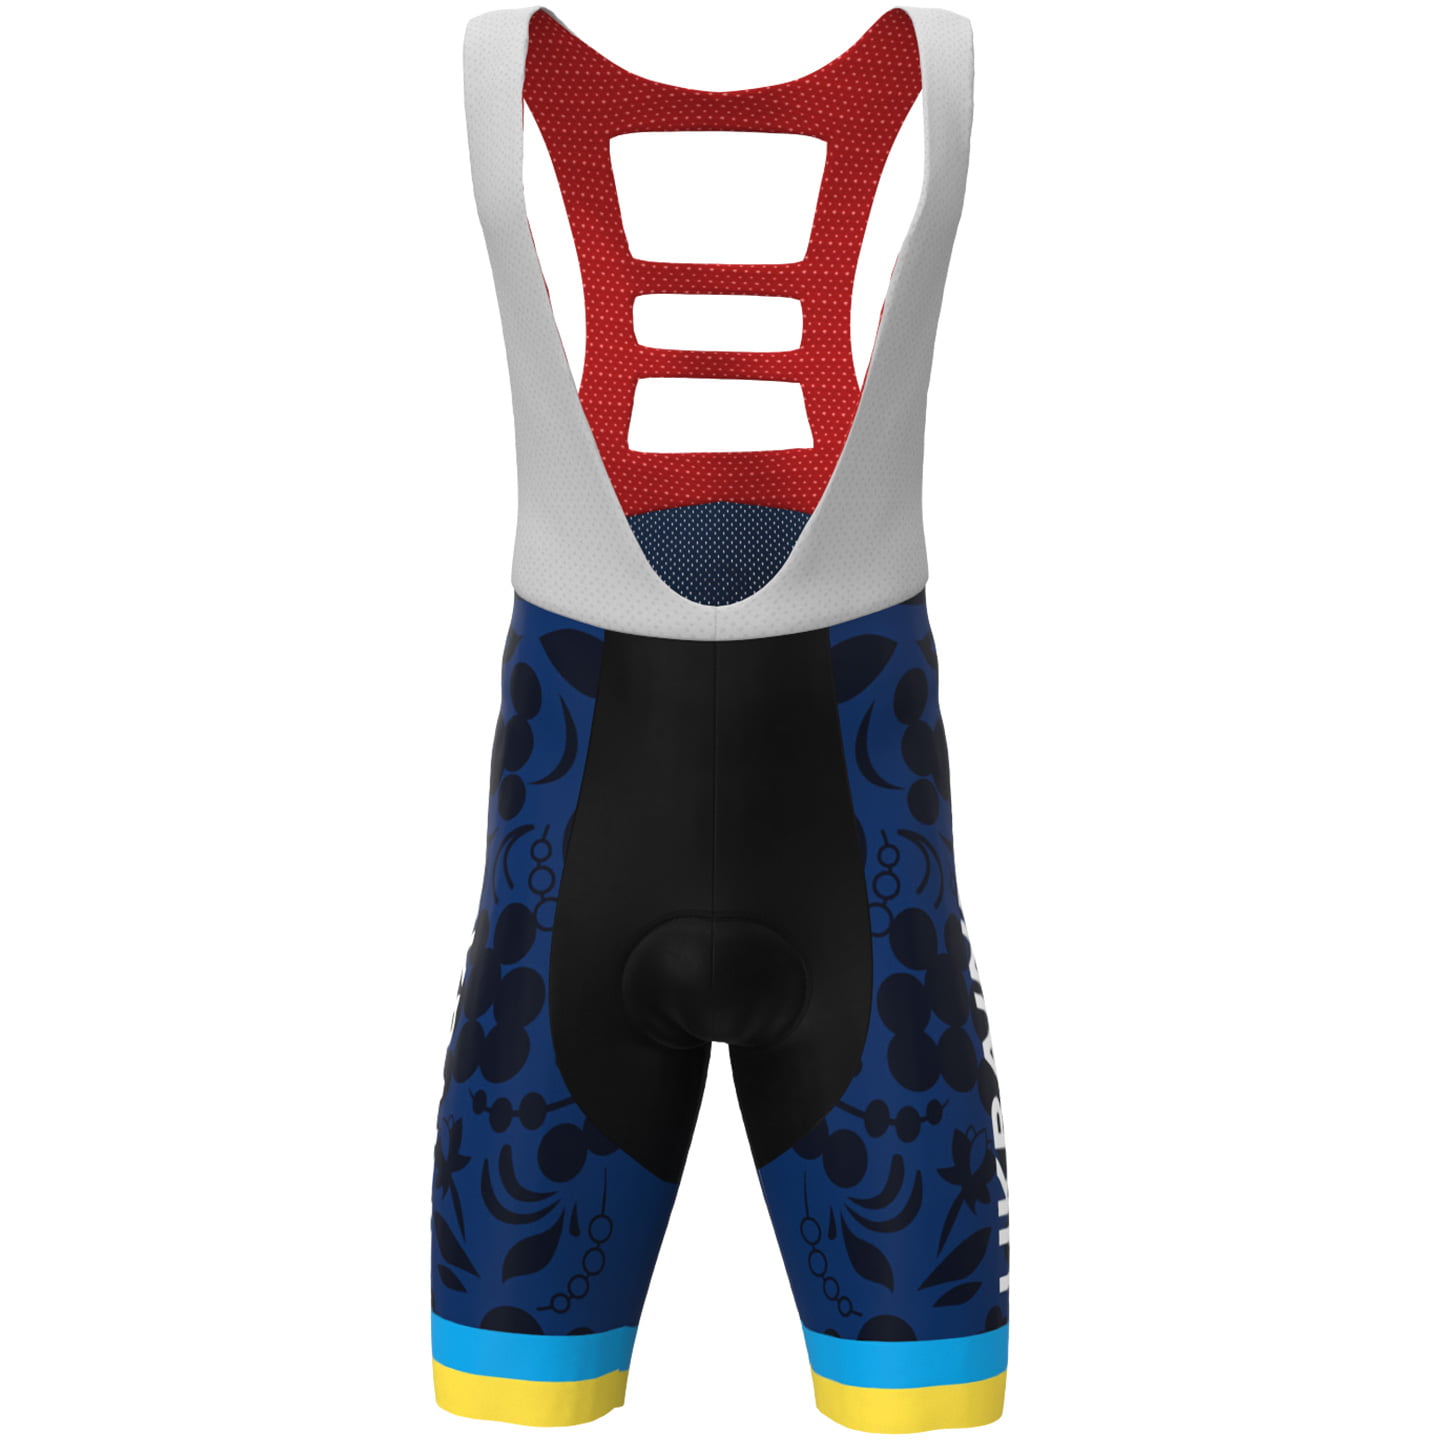 UKRAINIAN NATIONAL TEAM 2022 Bib Shorts Bib Shorts, for men, size XL, Cycle trousers, Cycle clothing